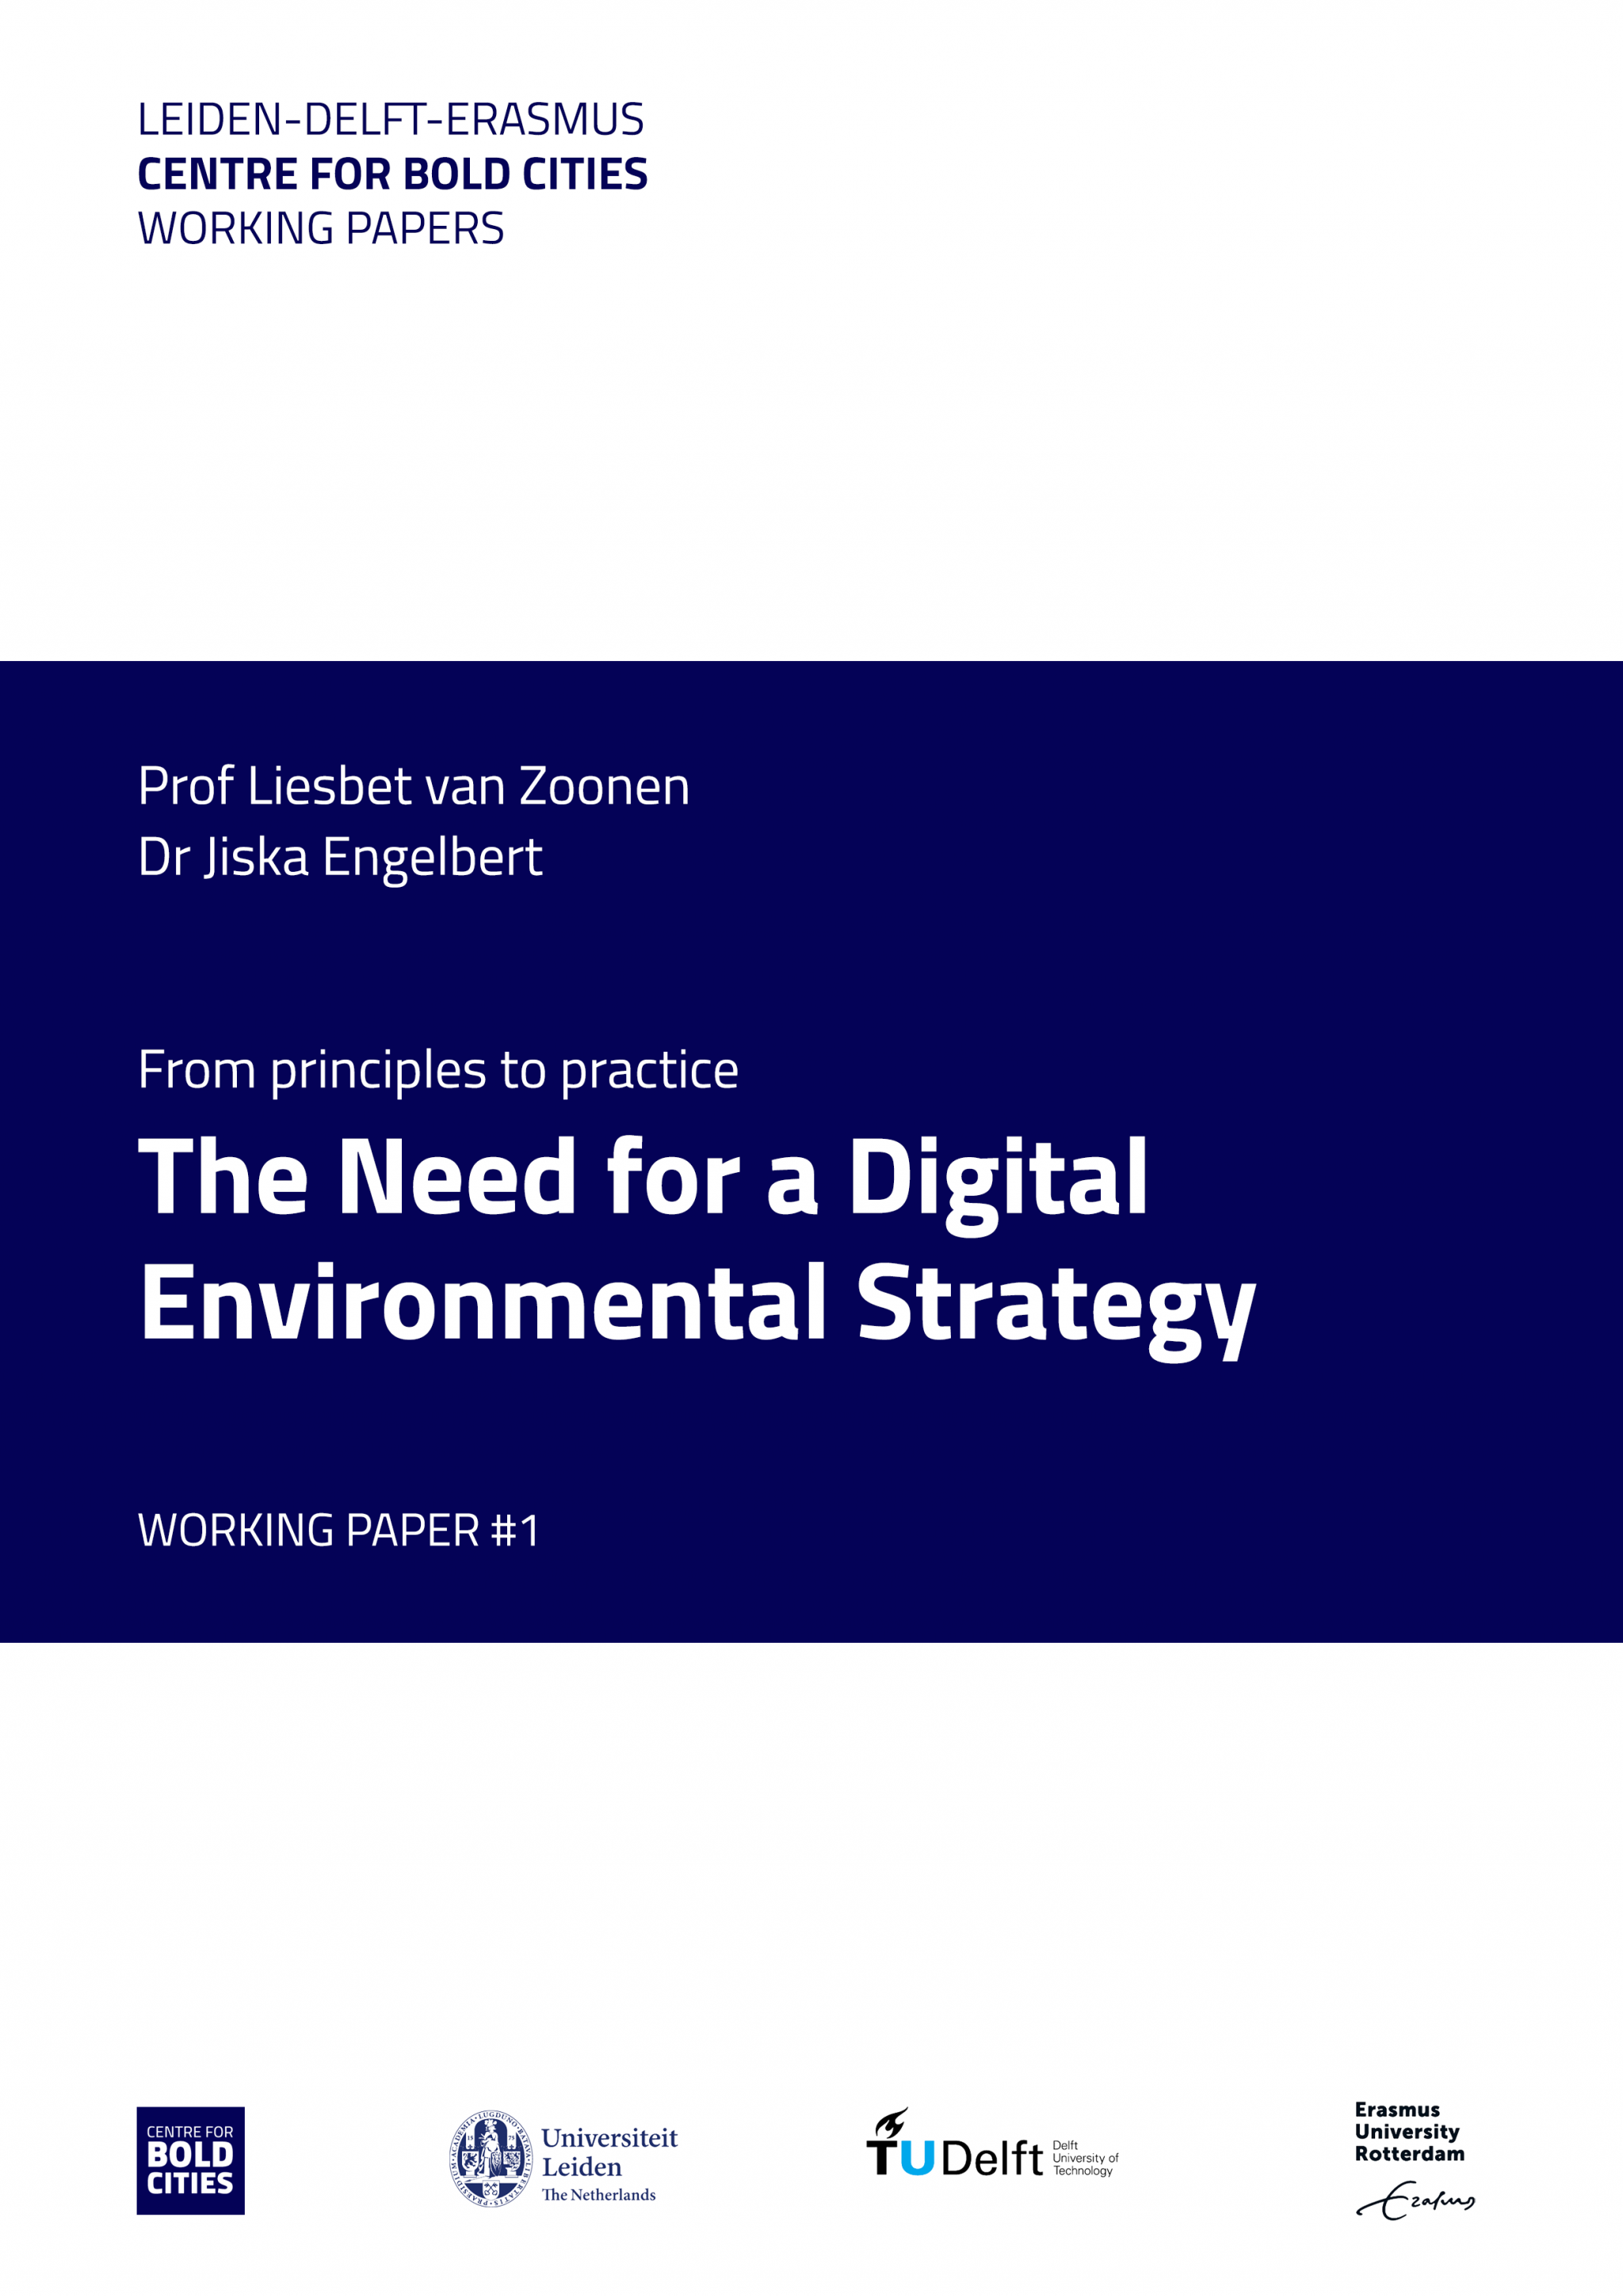 BOLD Cities working paper - Van Zoonen & Engelbert - The need for a digital environmental strategy